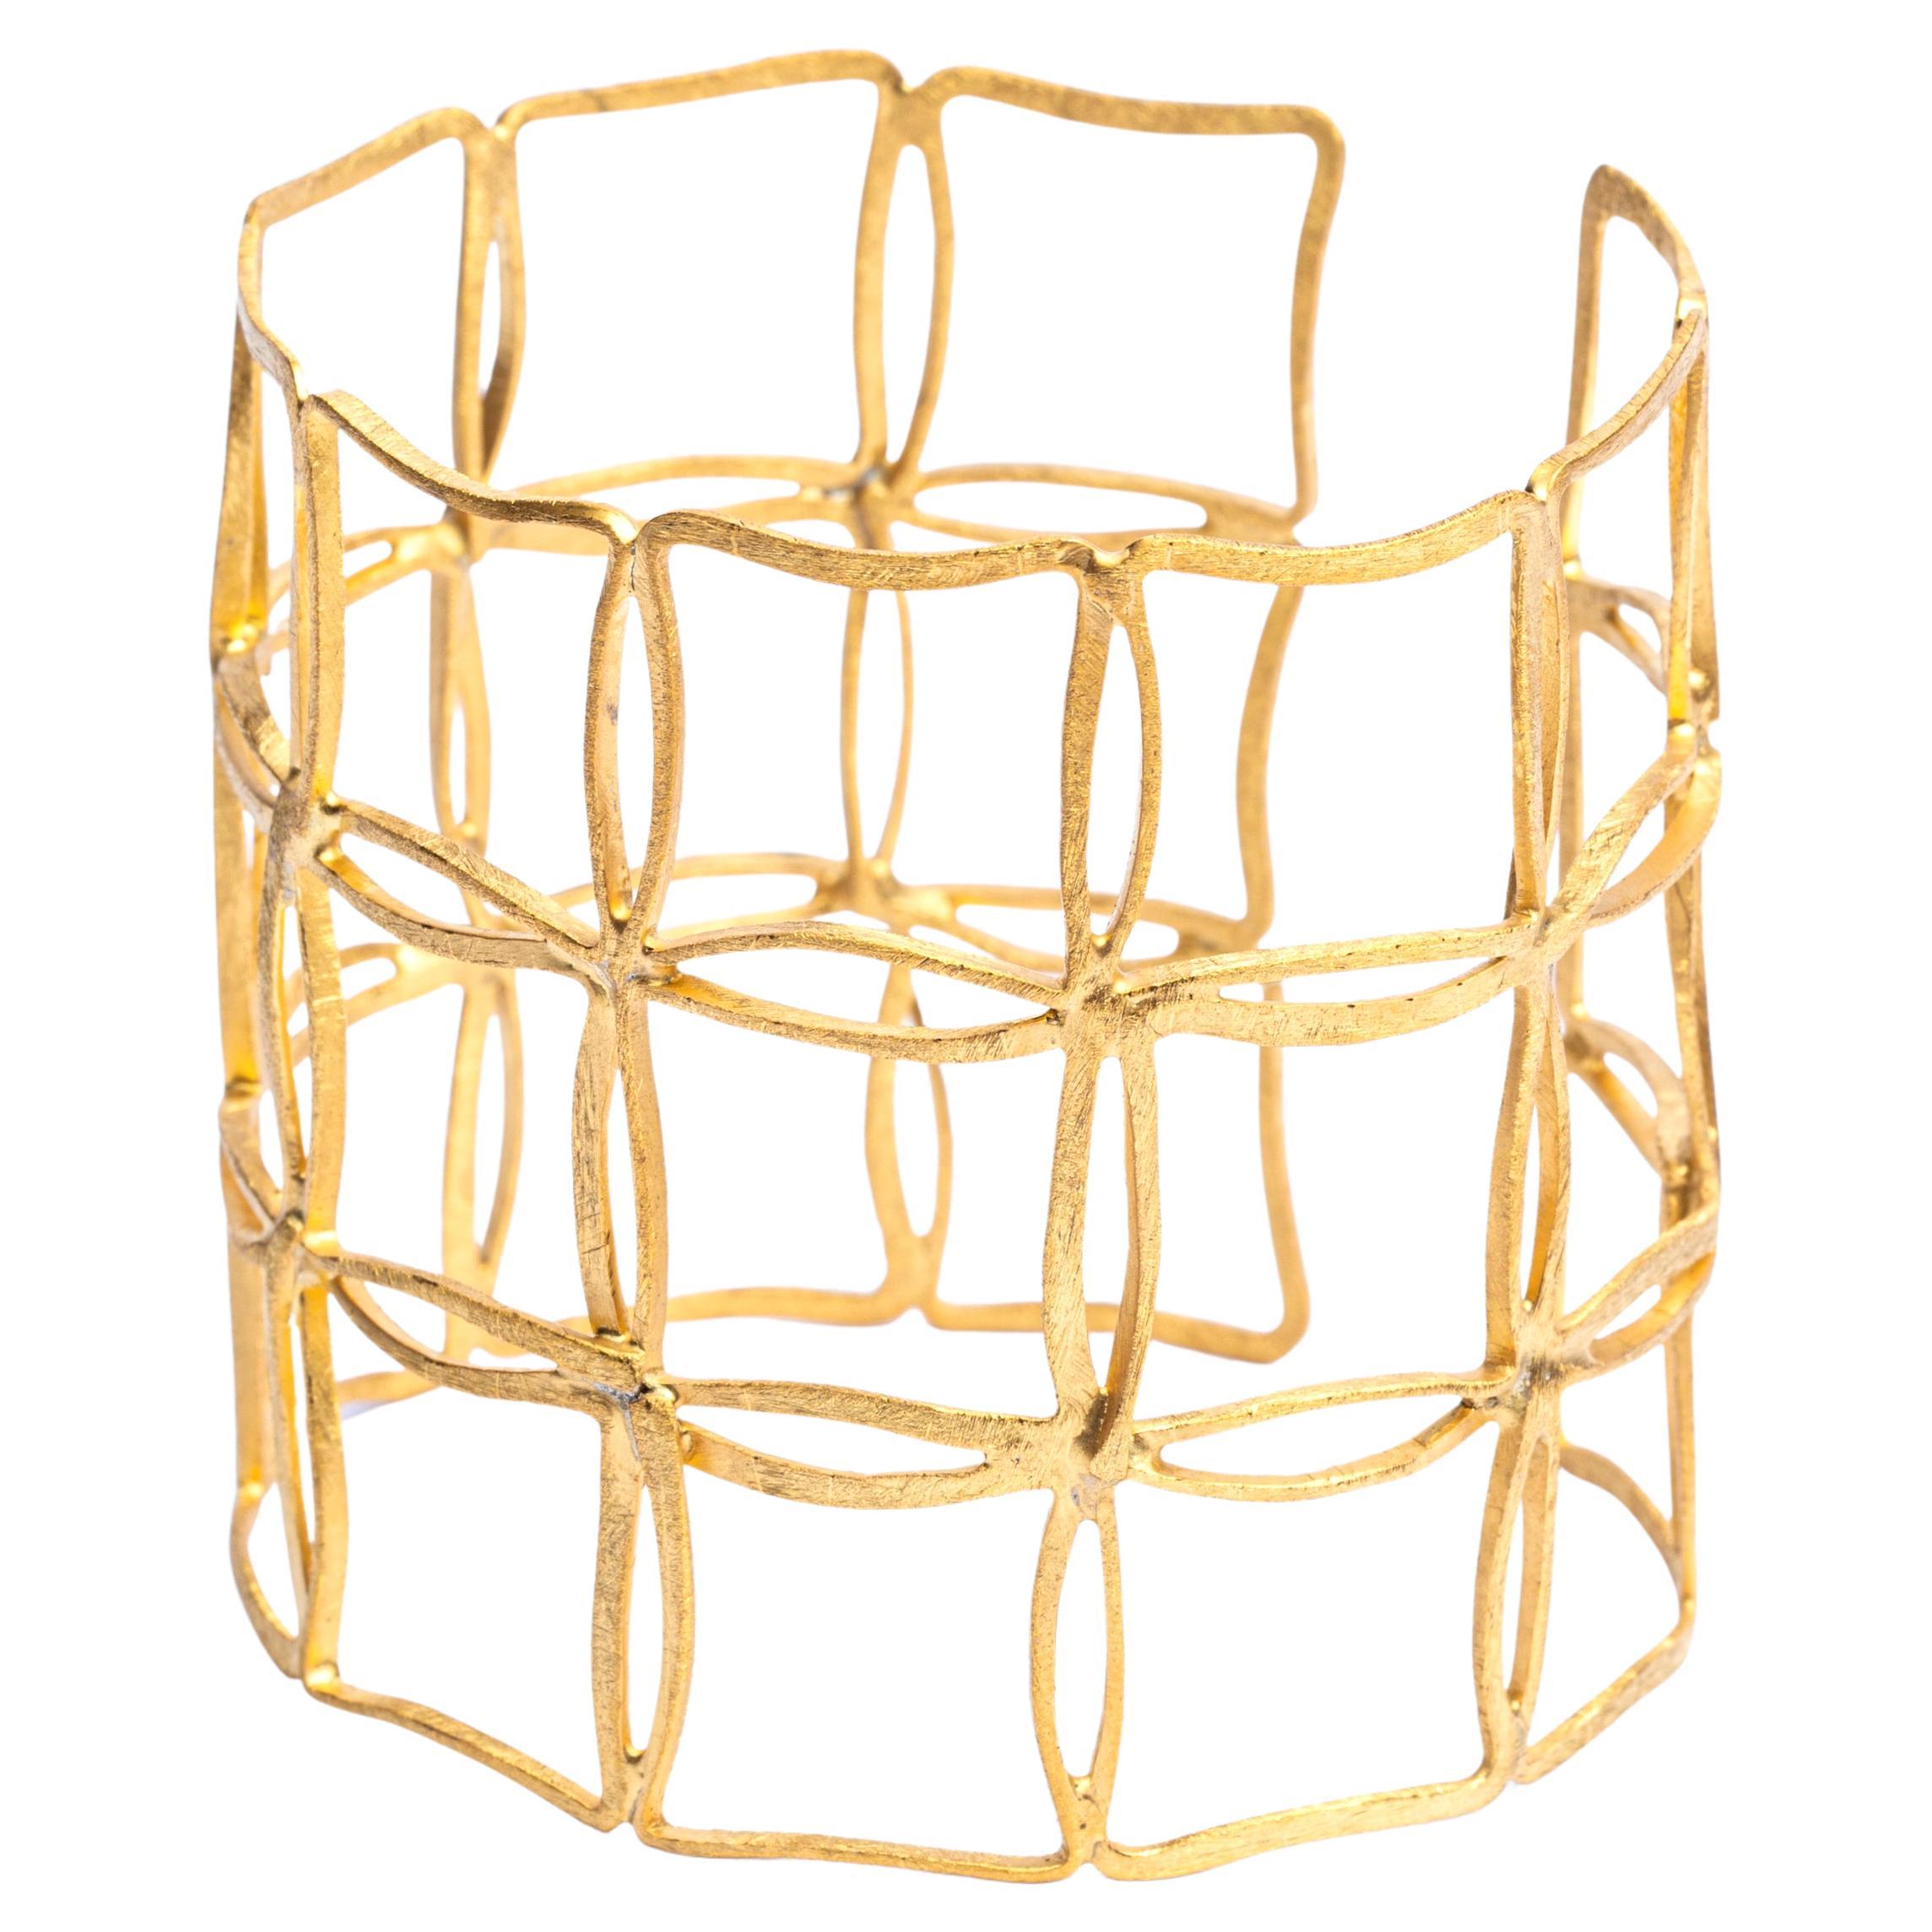 Vergoldeter Käfig-Armreif aus Sterlingsilber mit Käfig